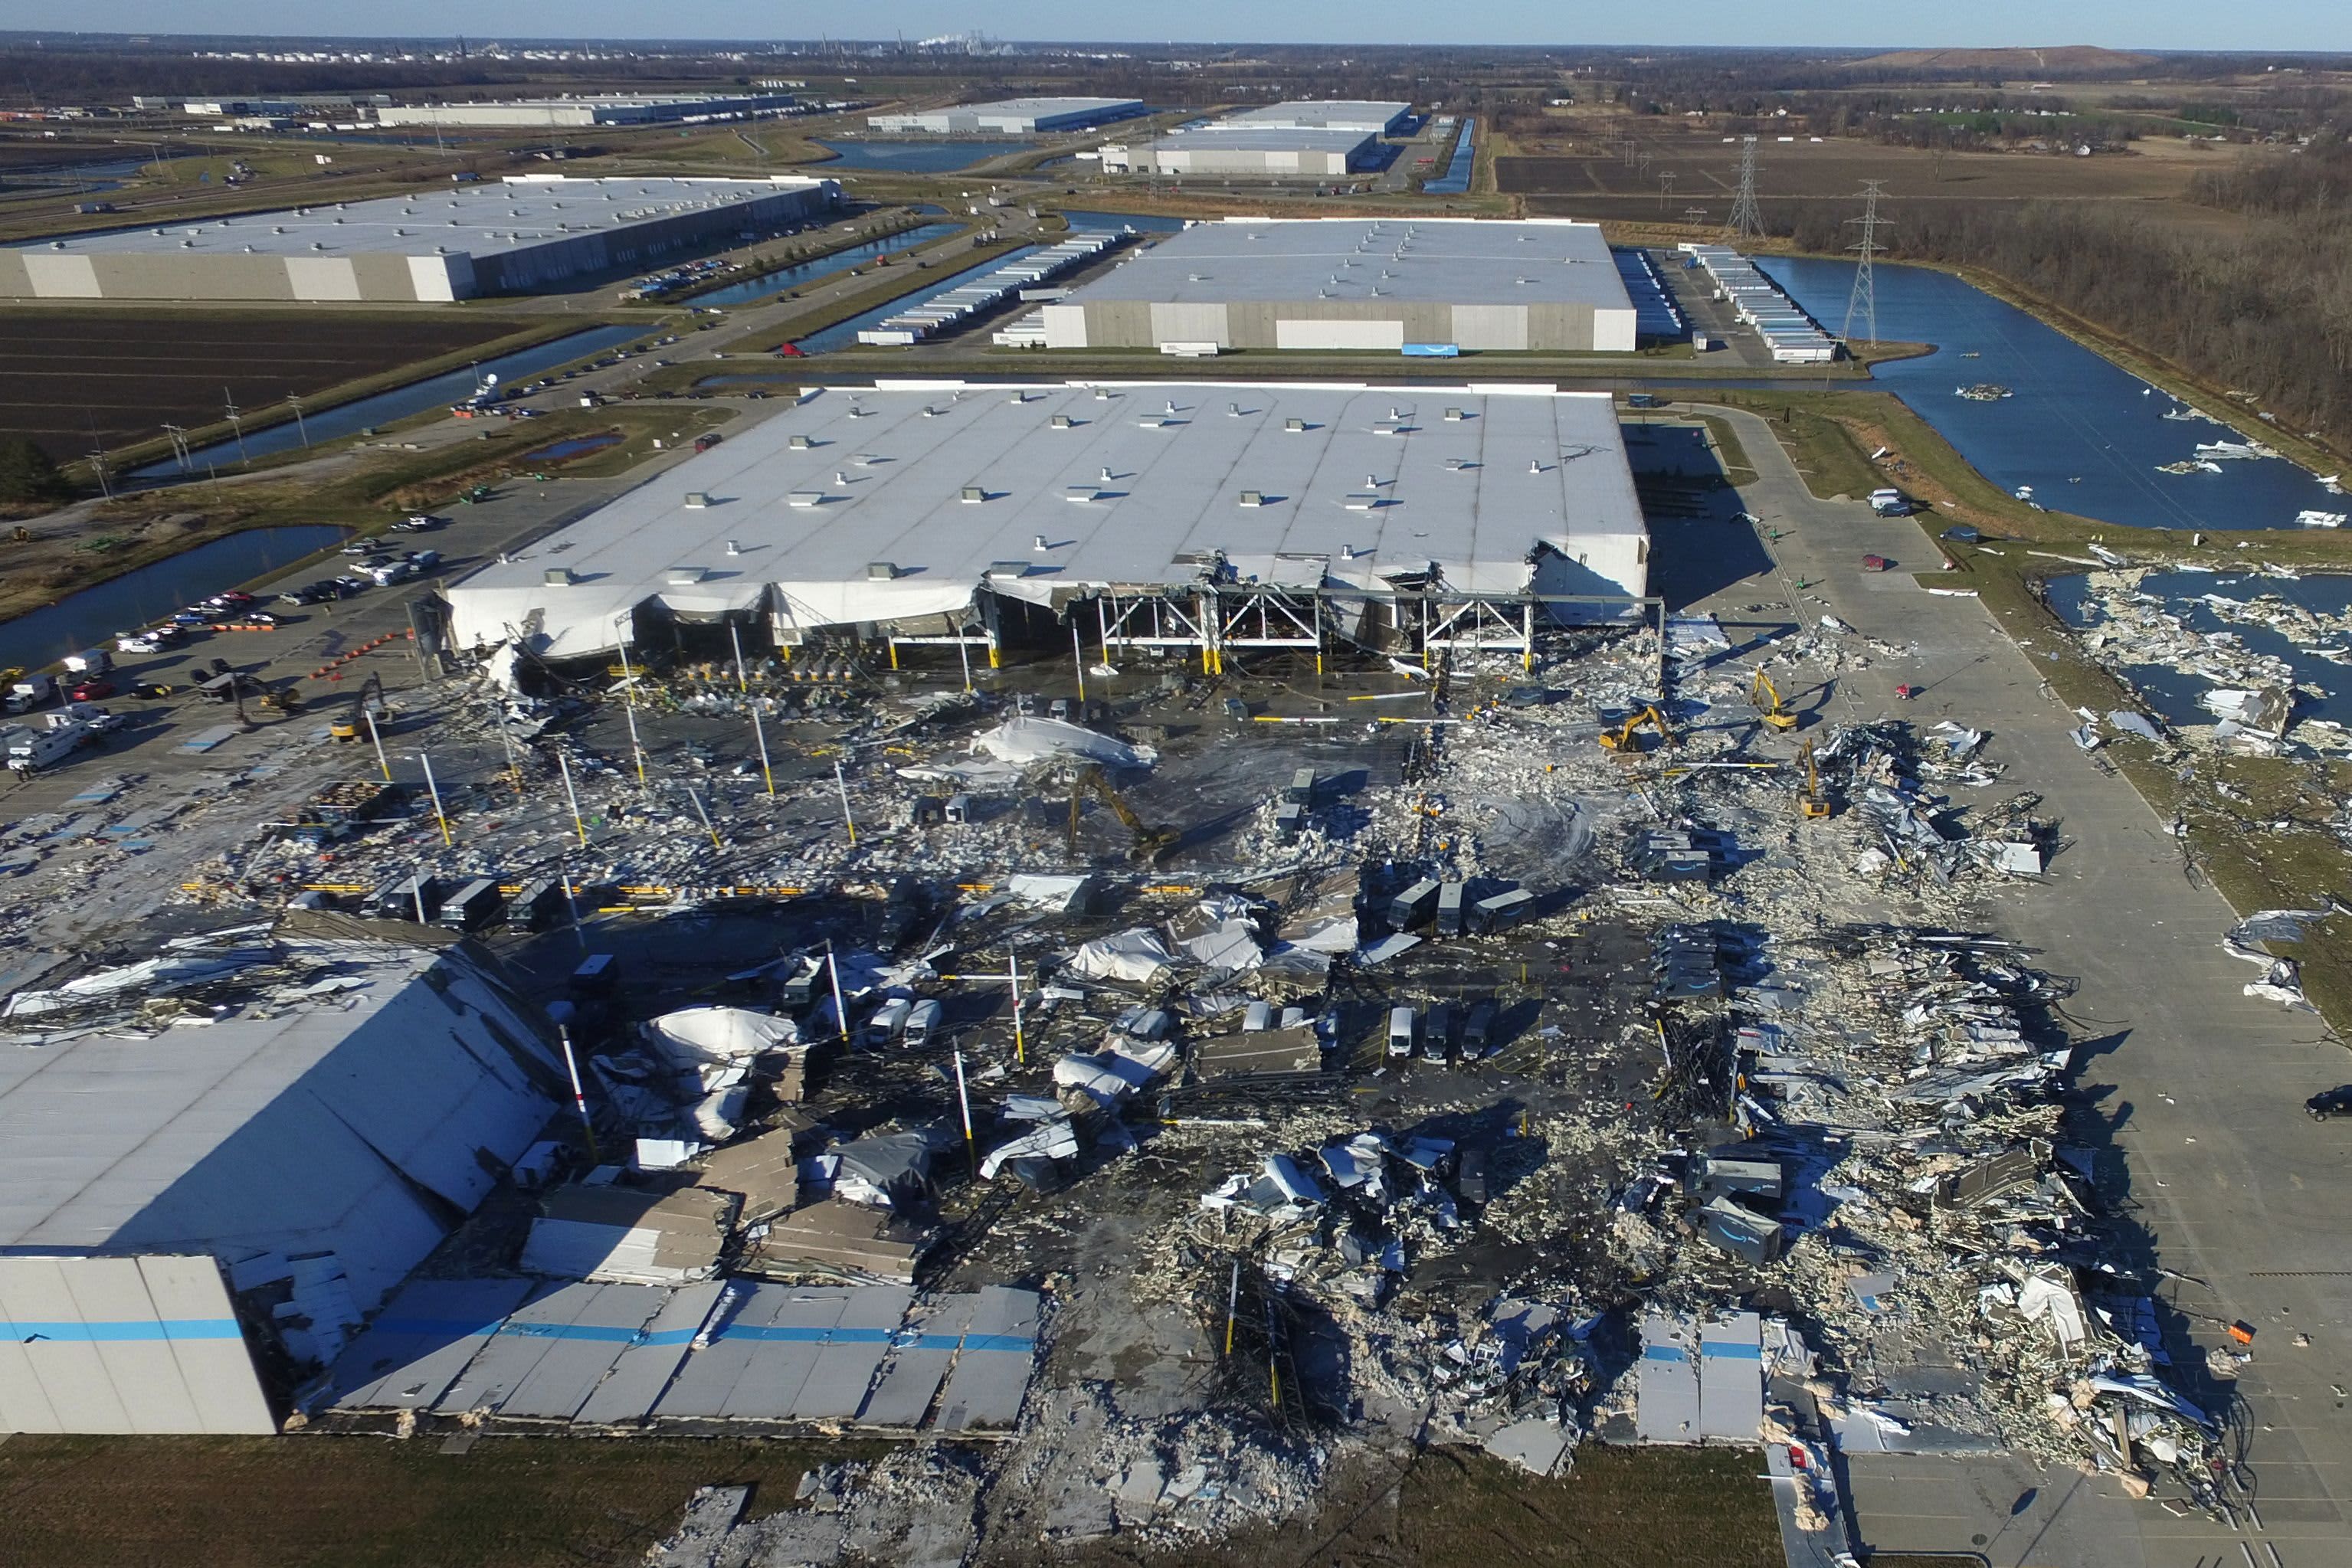 warehouse in Illinois hit by tornado, killing 6